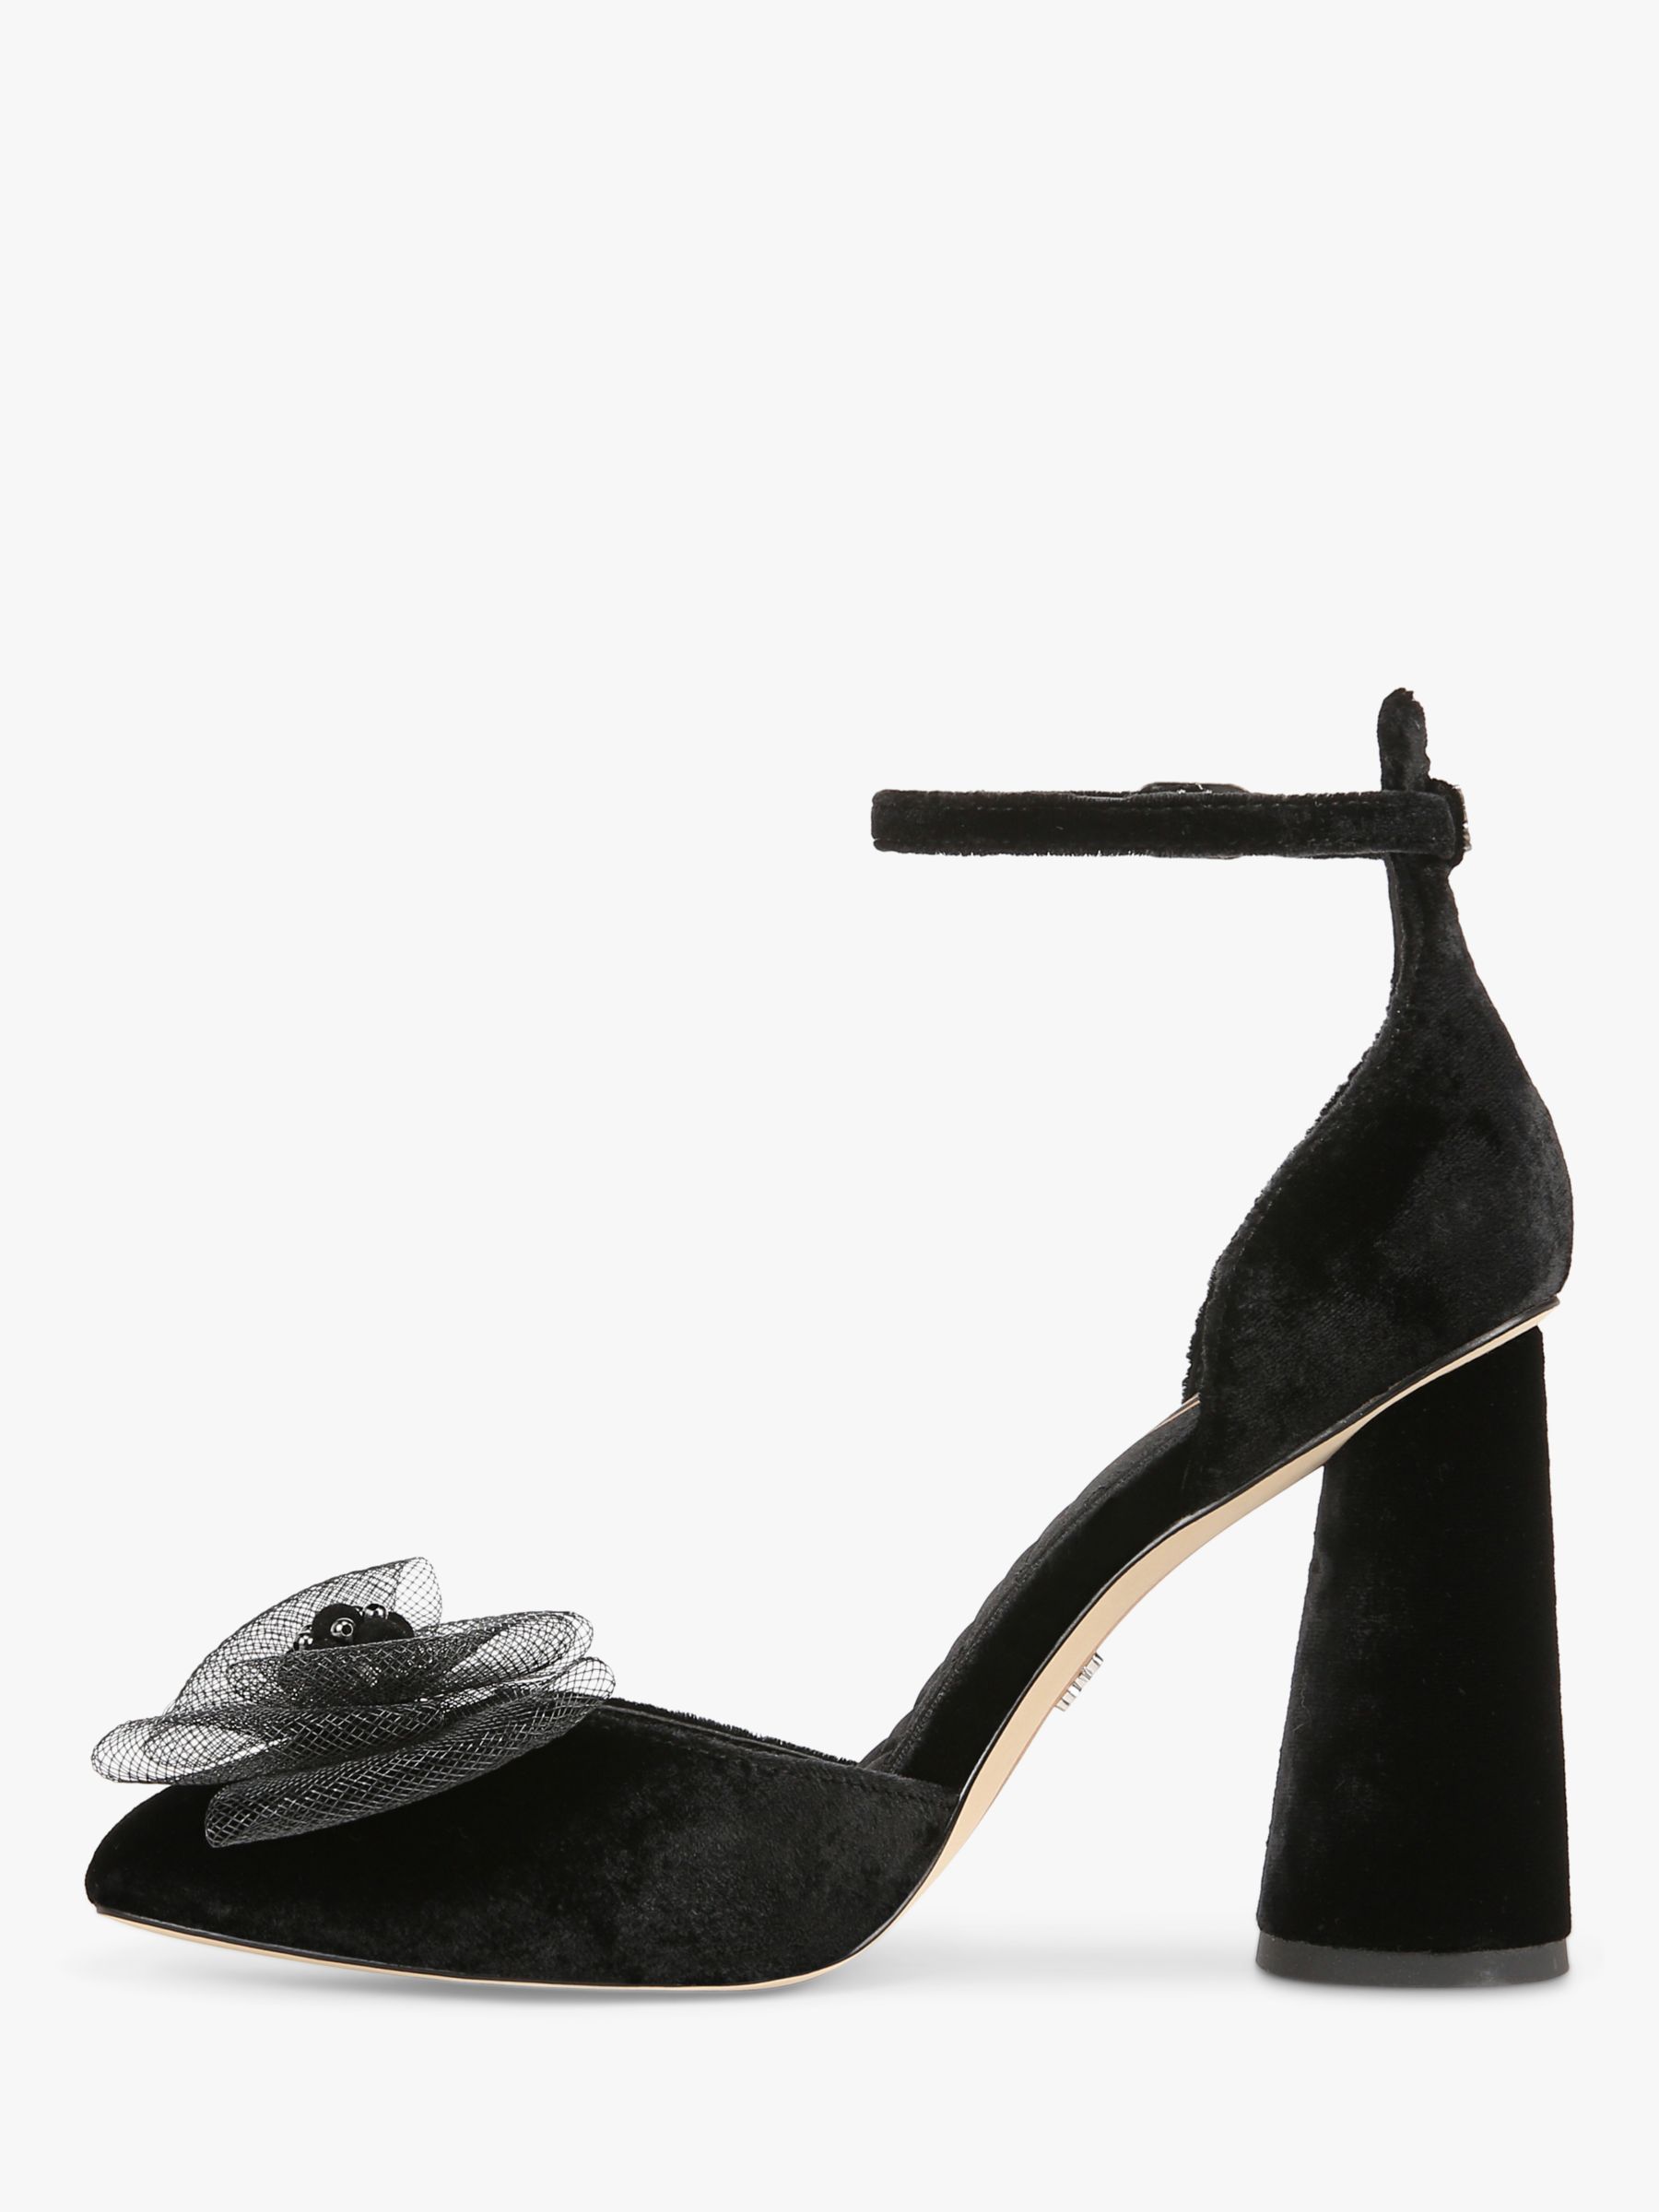 Sam Edelman Colter Ankle Strap Heeled Court Shoes, Black, 3